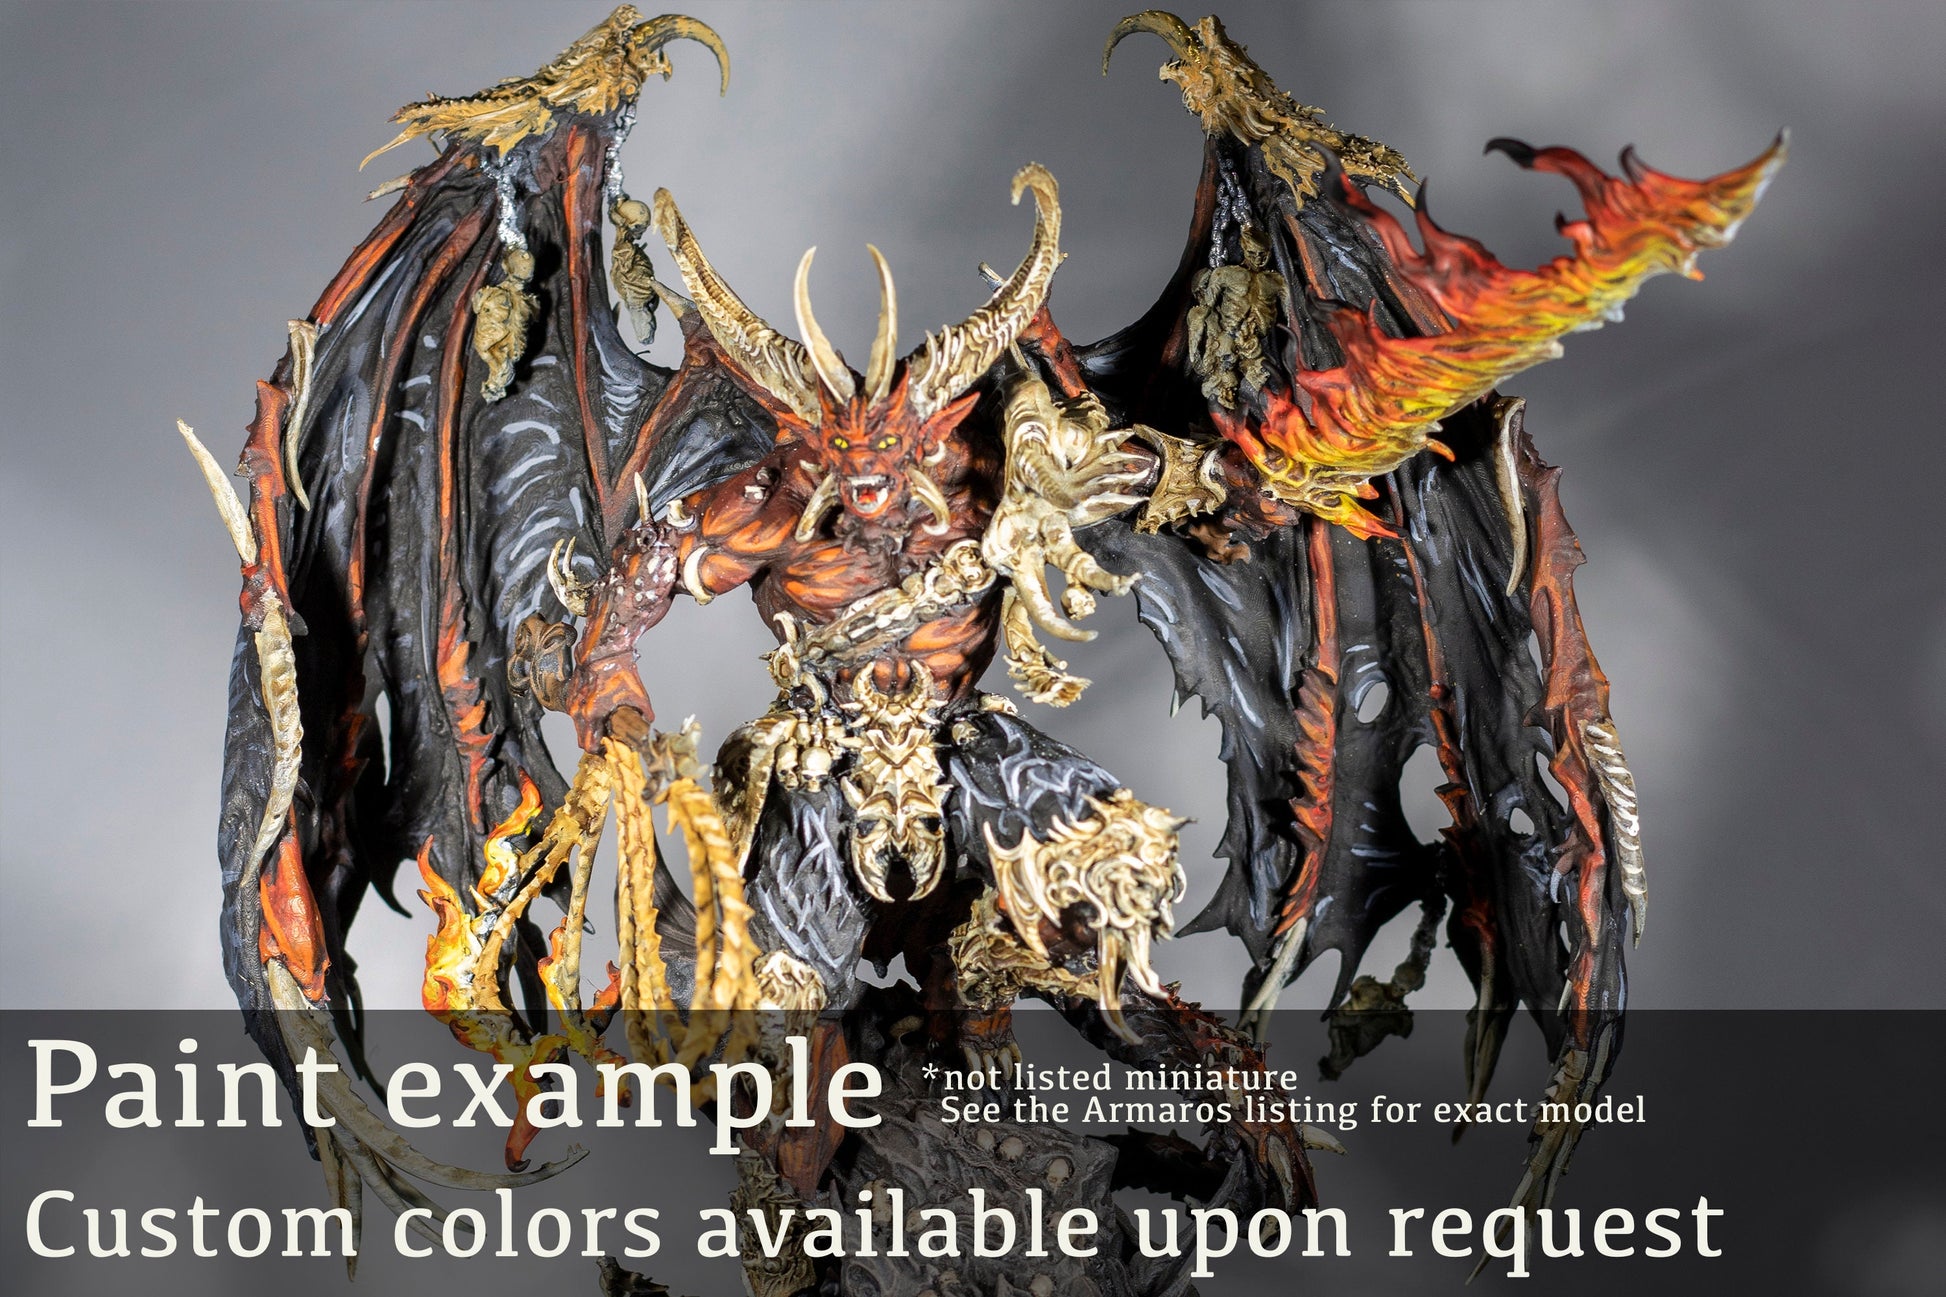 Marble Eye Minion Trio - Mini Monster Mayhem Printed Miniature | Dungeons & Dragons | Pathfinder | Tabletop